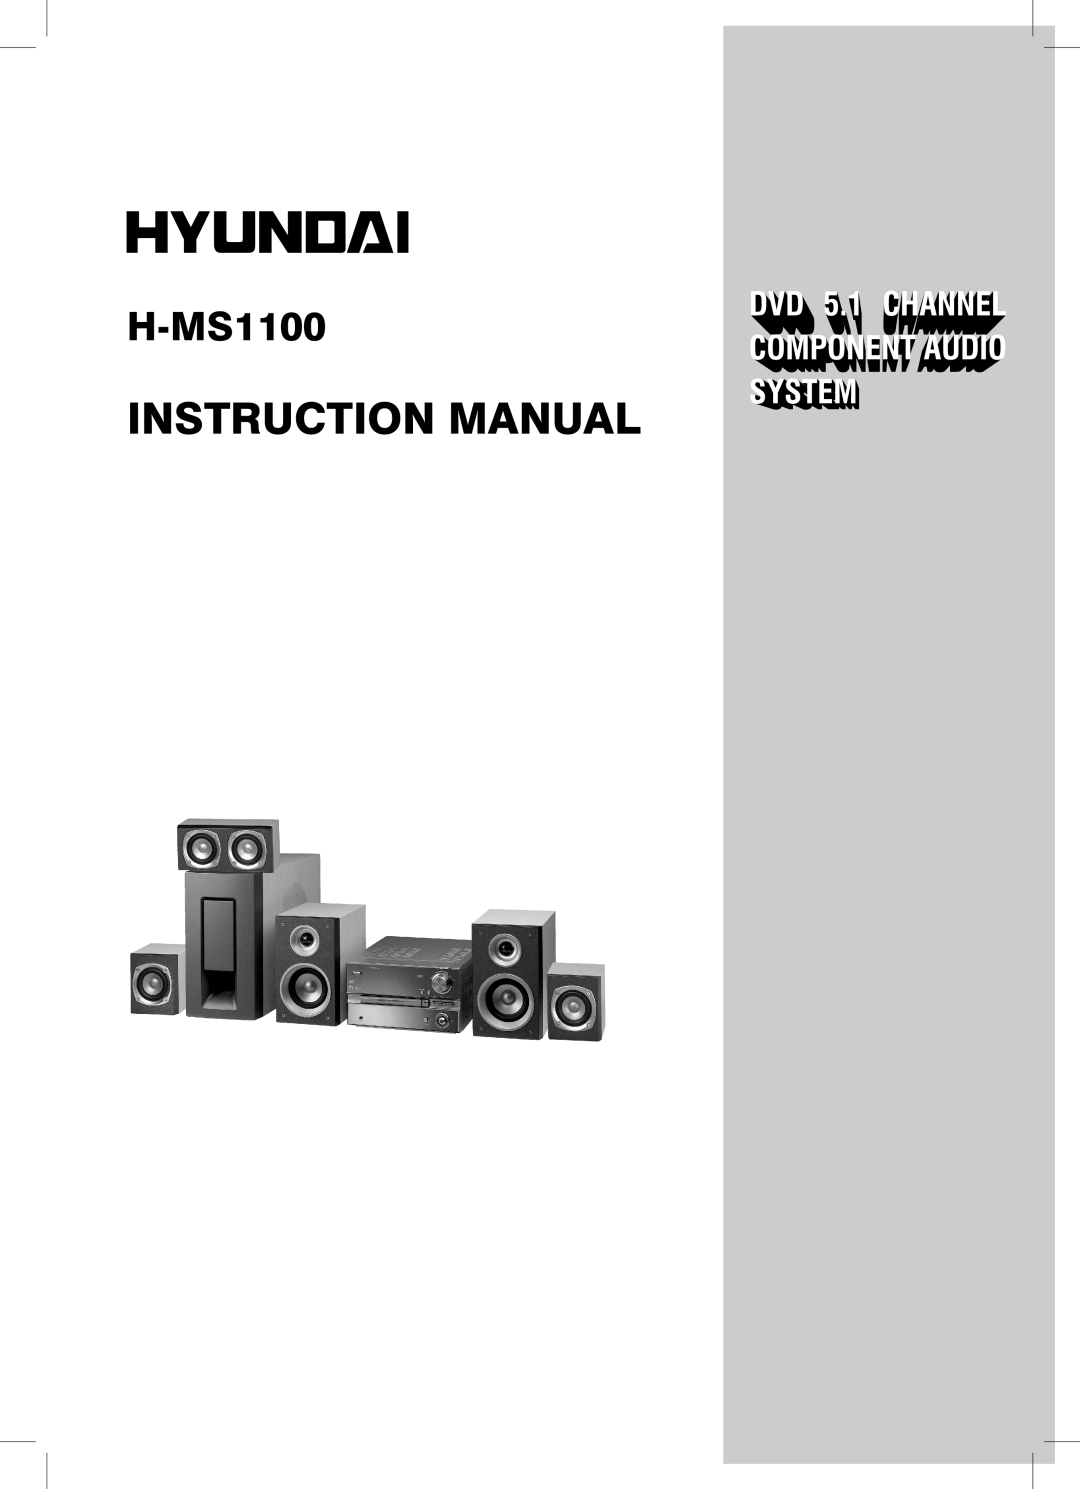 Hyundai H-MS1100 manual 